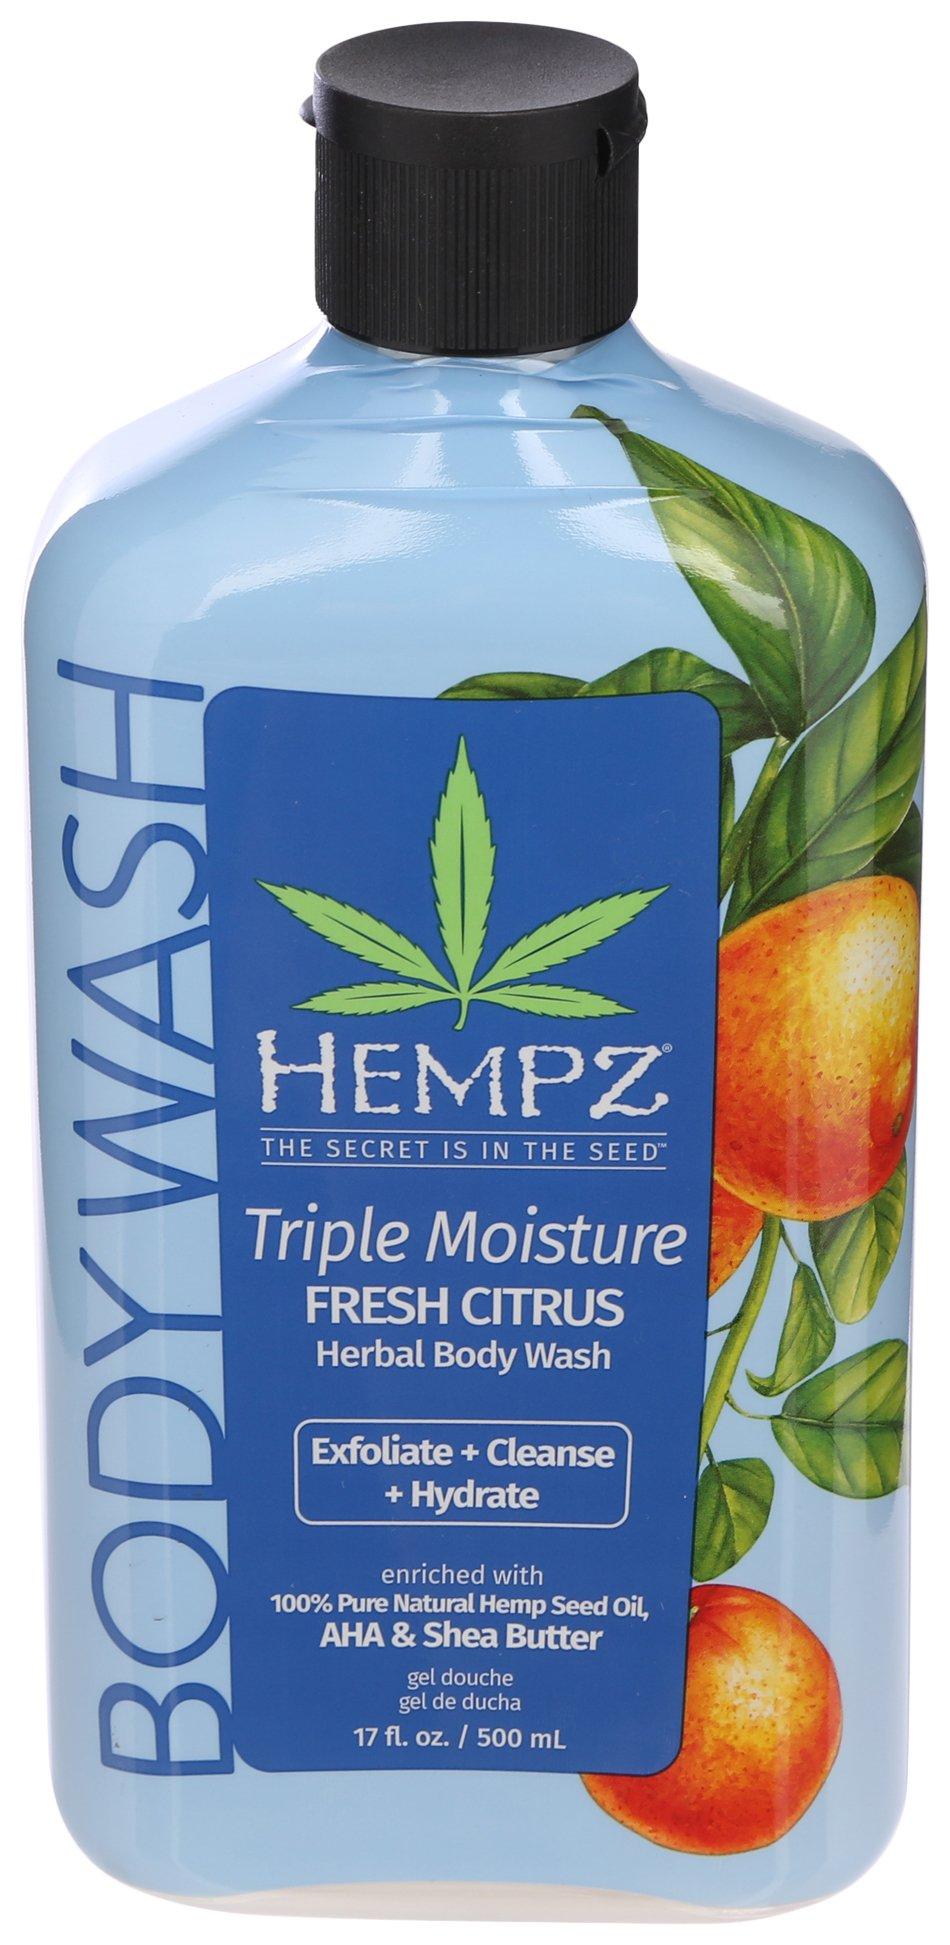 Triple Moisture Fresh Citrus Herbal Body Wash